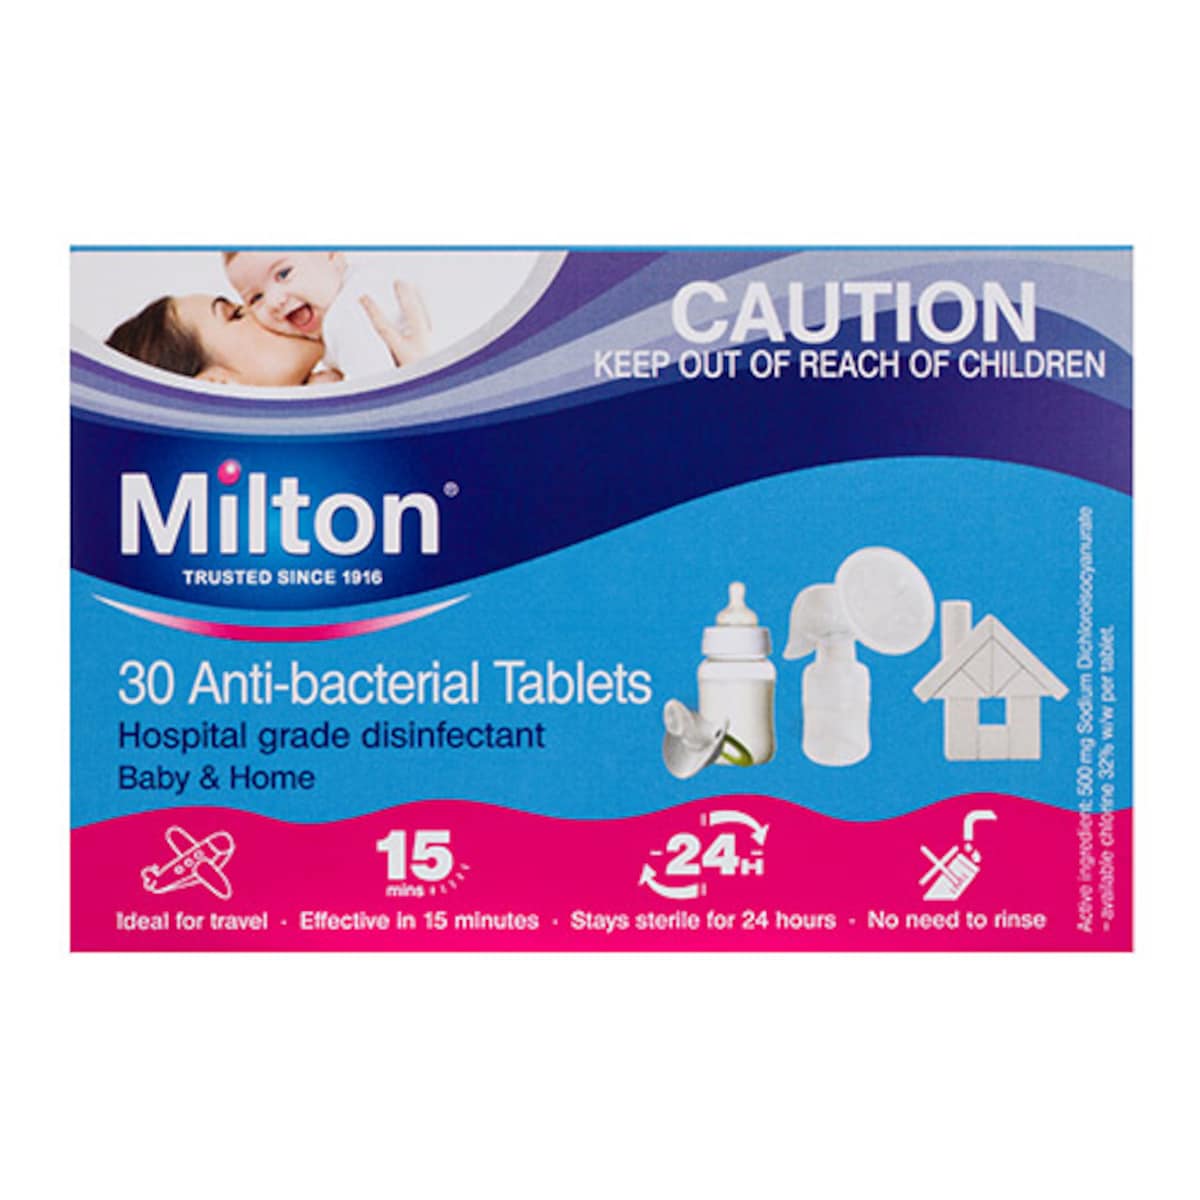 Milton Antibacterial Tablets 30 Pack